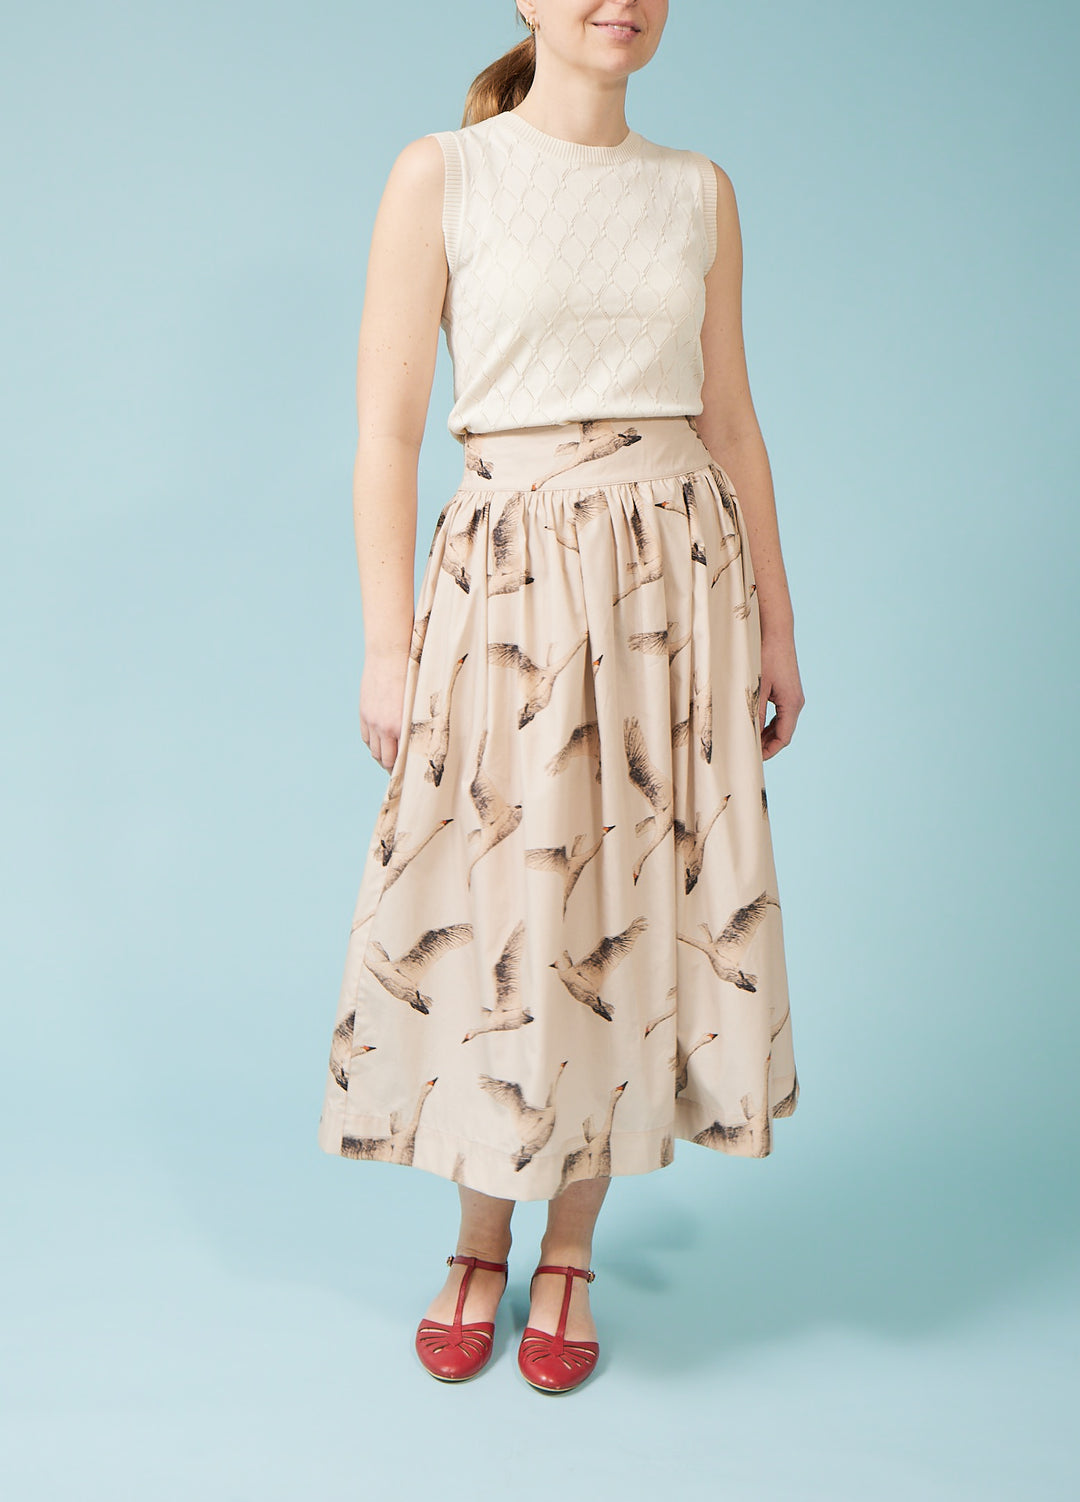 Mette skirt - beige with swans